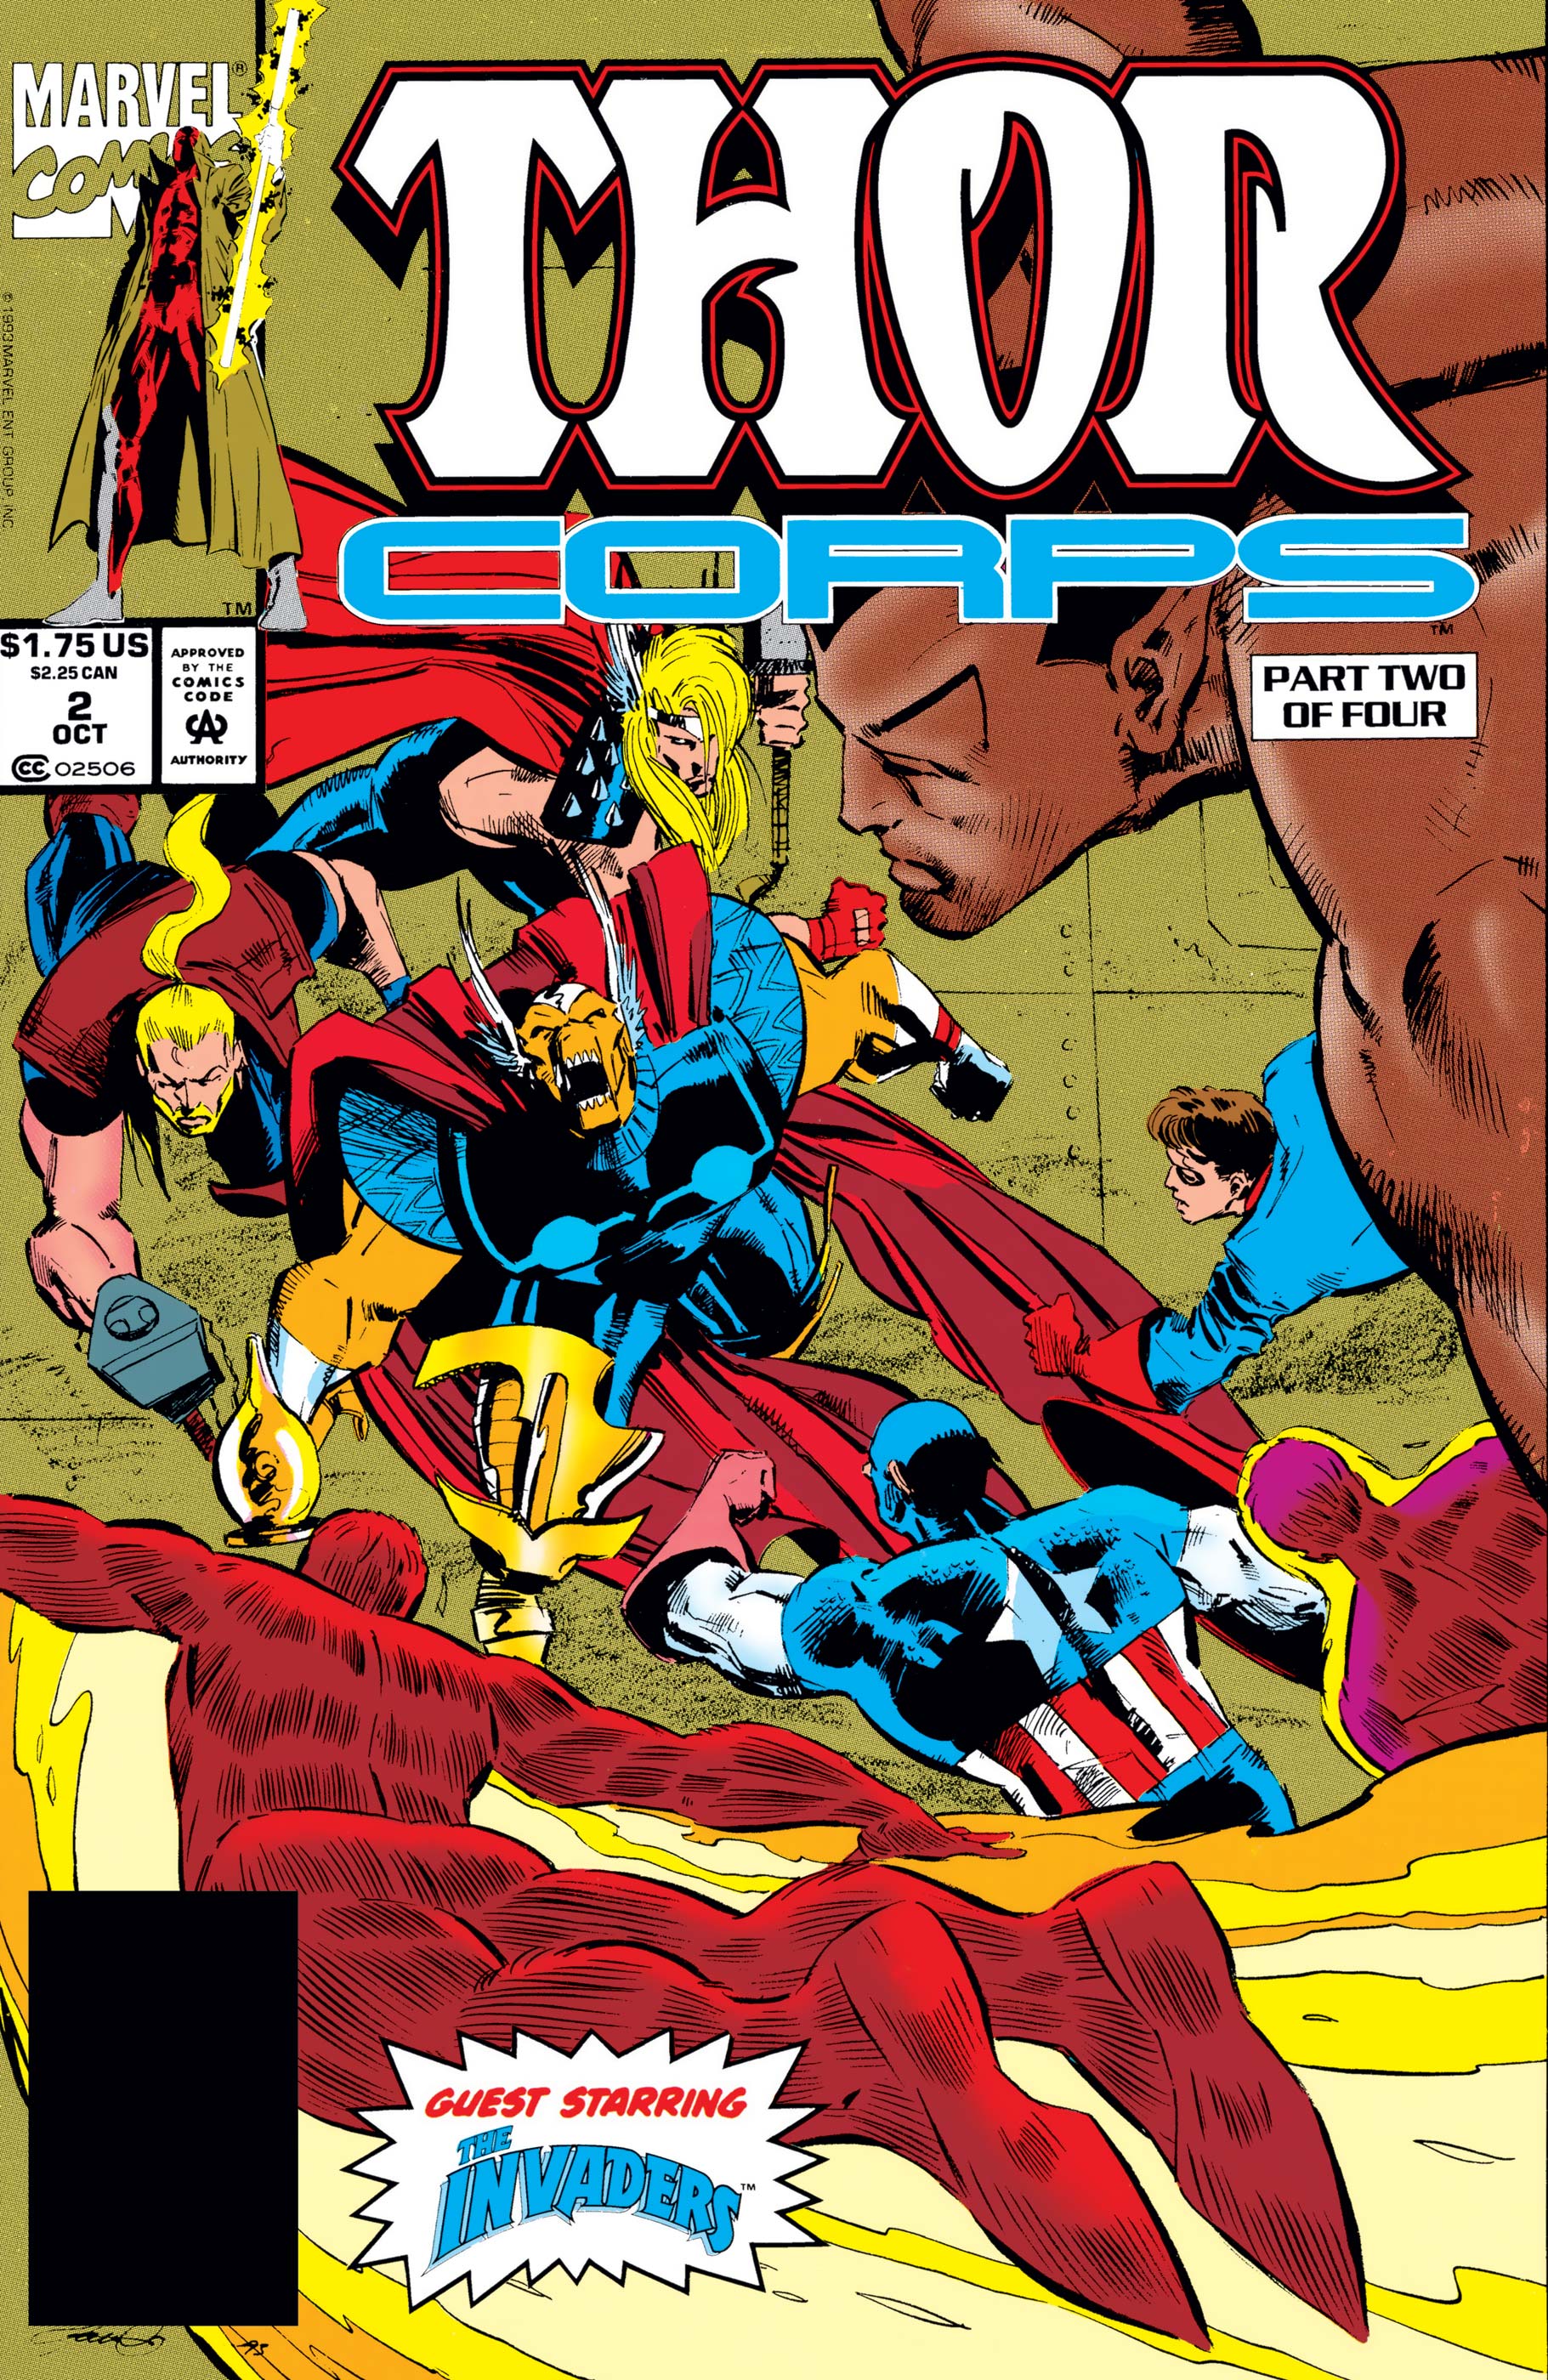 Thor Corps (1993) #2